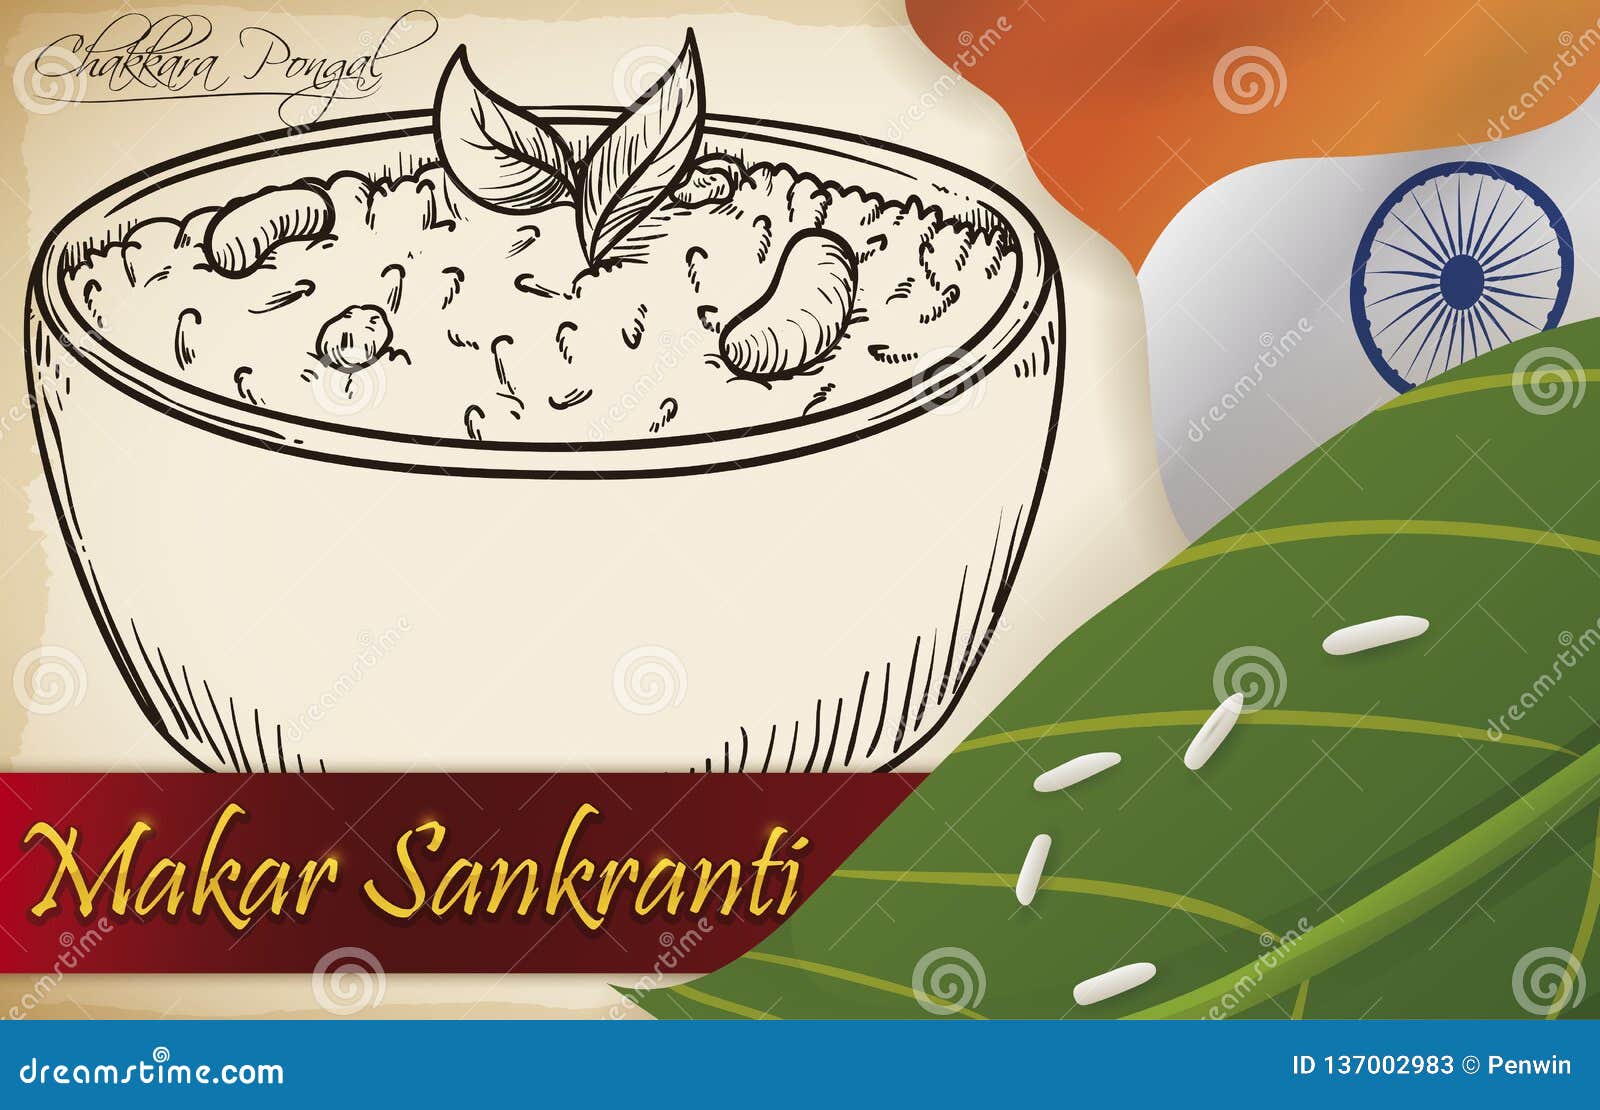 Delicious Chakkara Pongal Draw To Celebrate Makar Sankranti ...